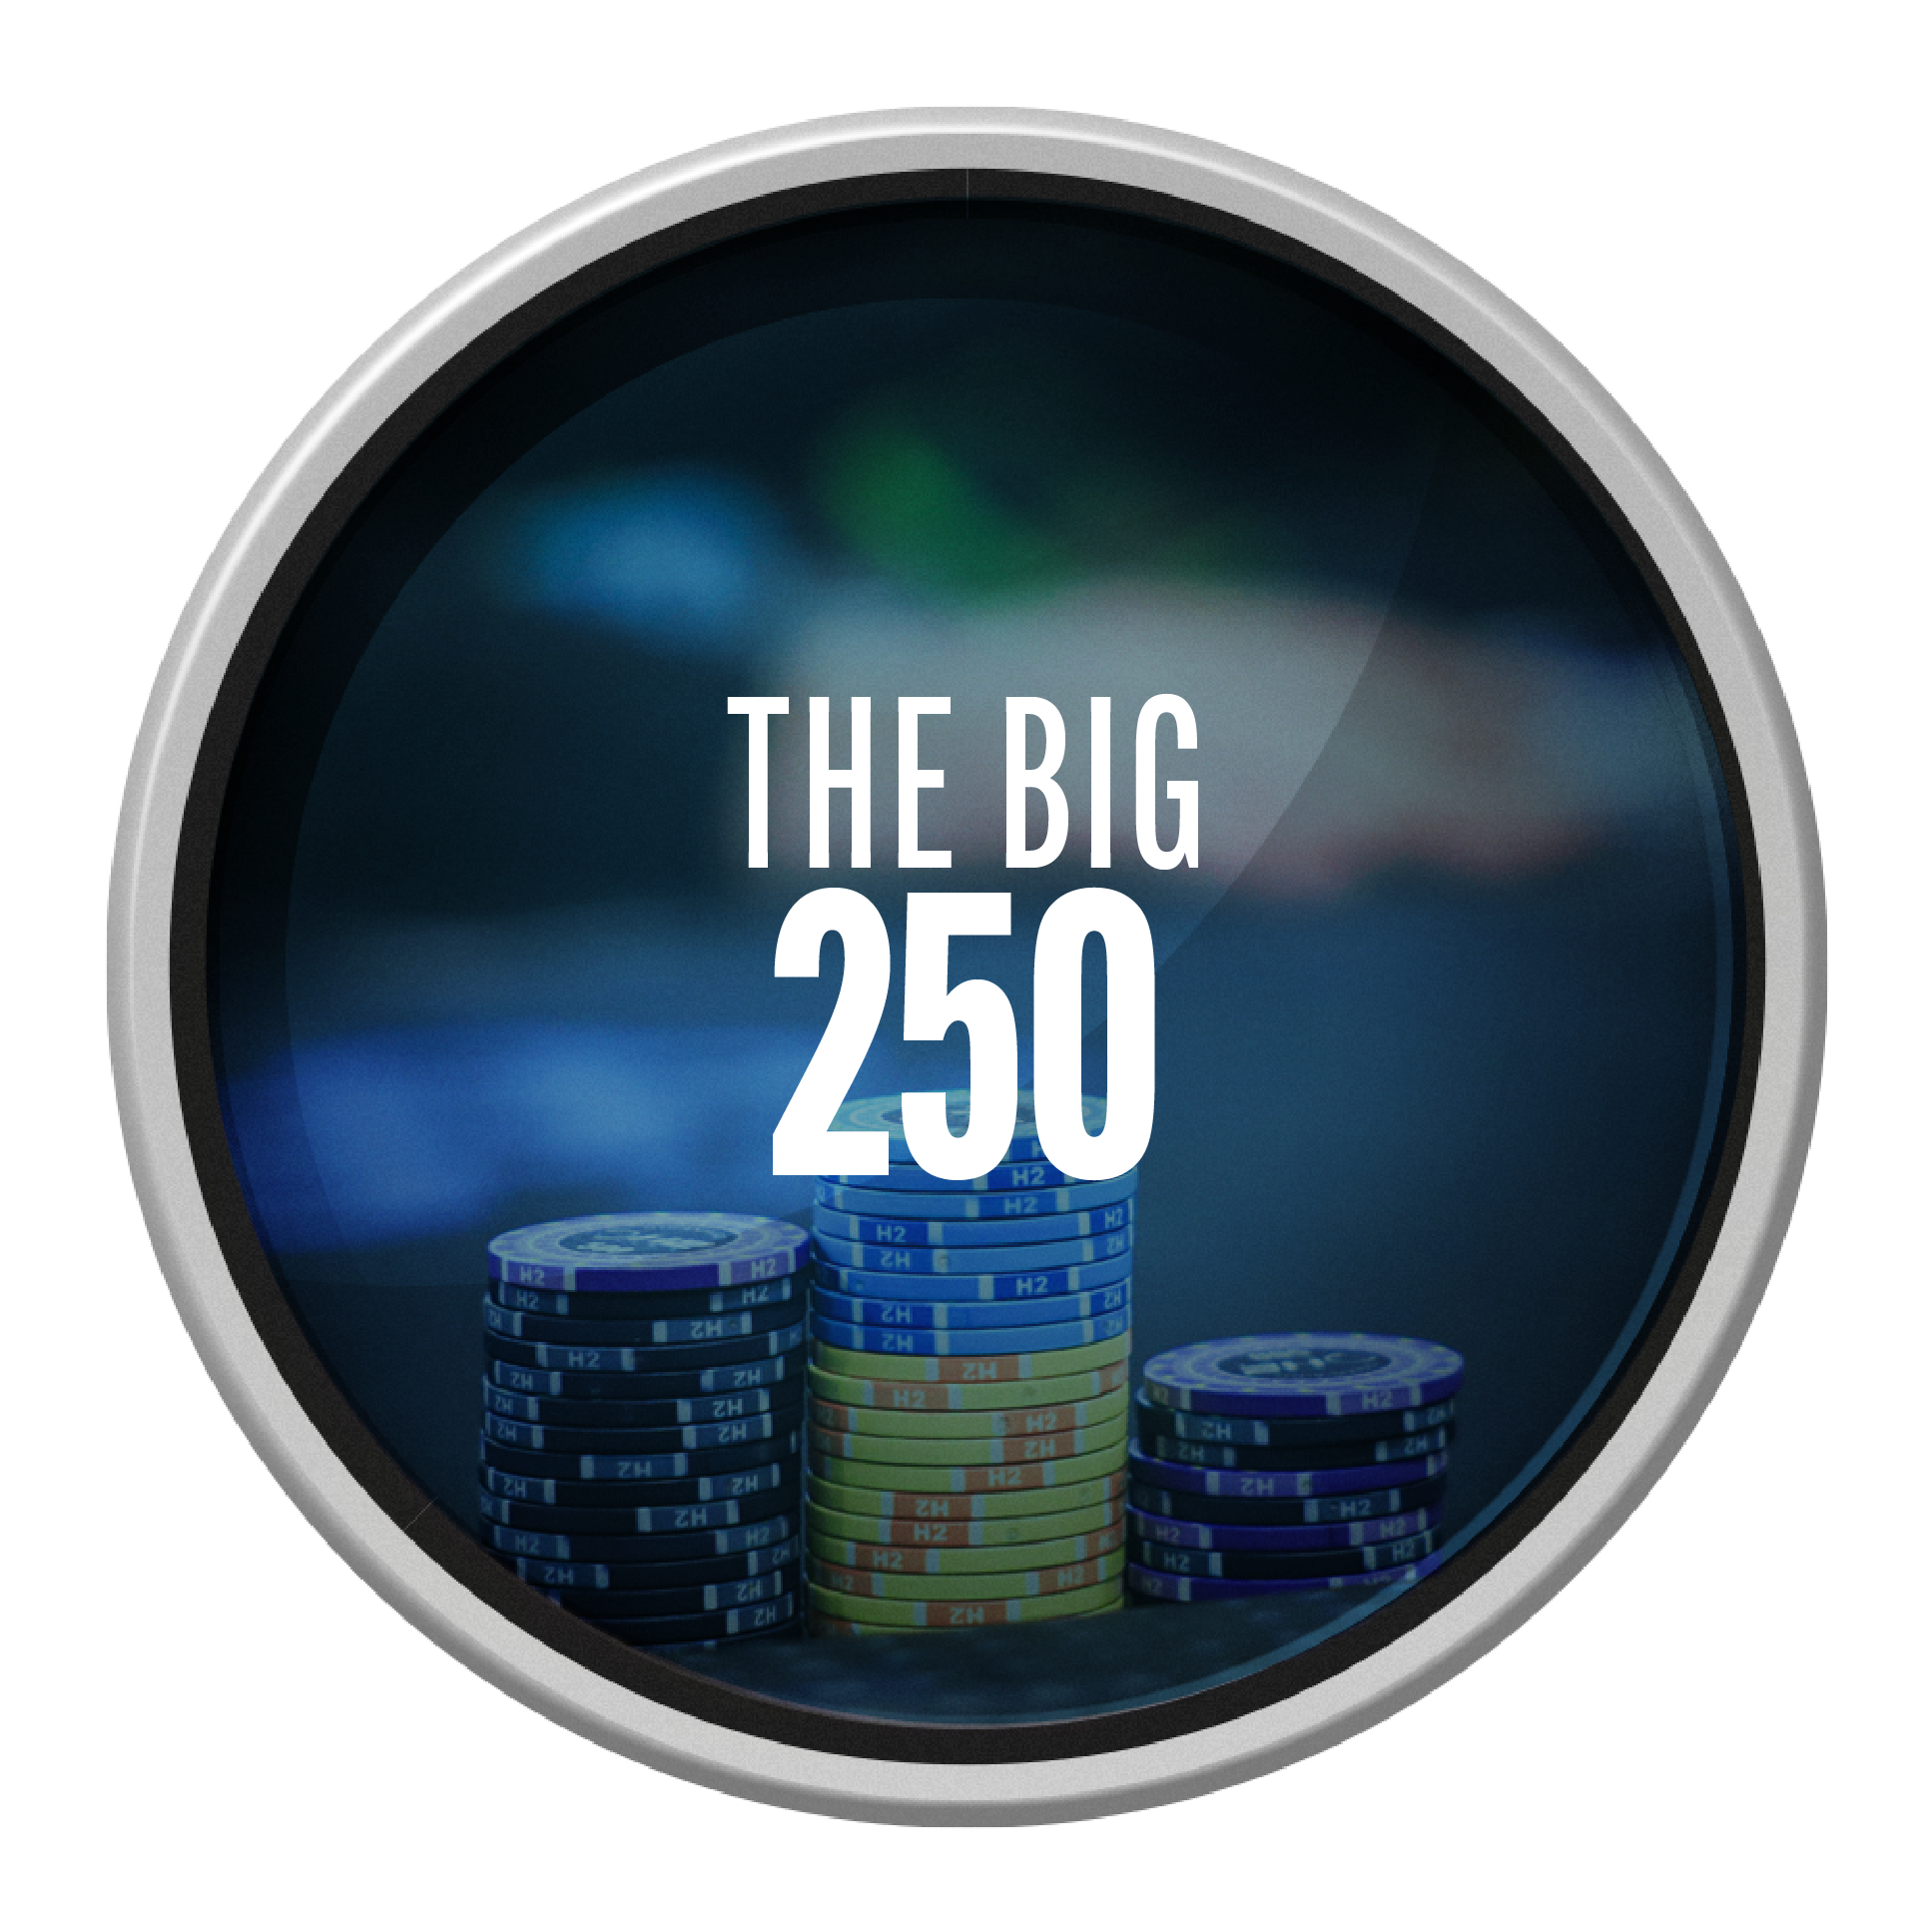 THE BIG 250 